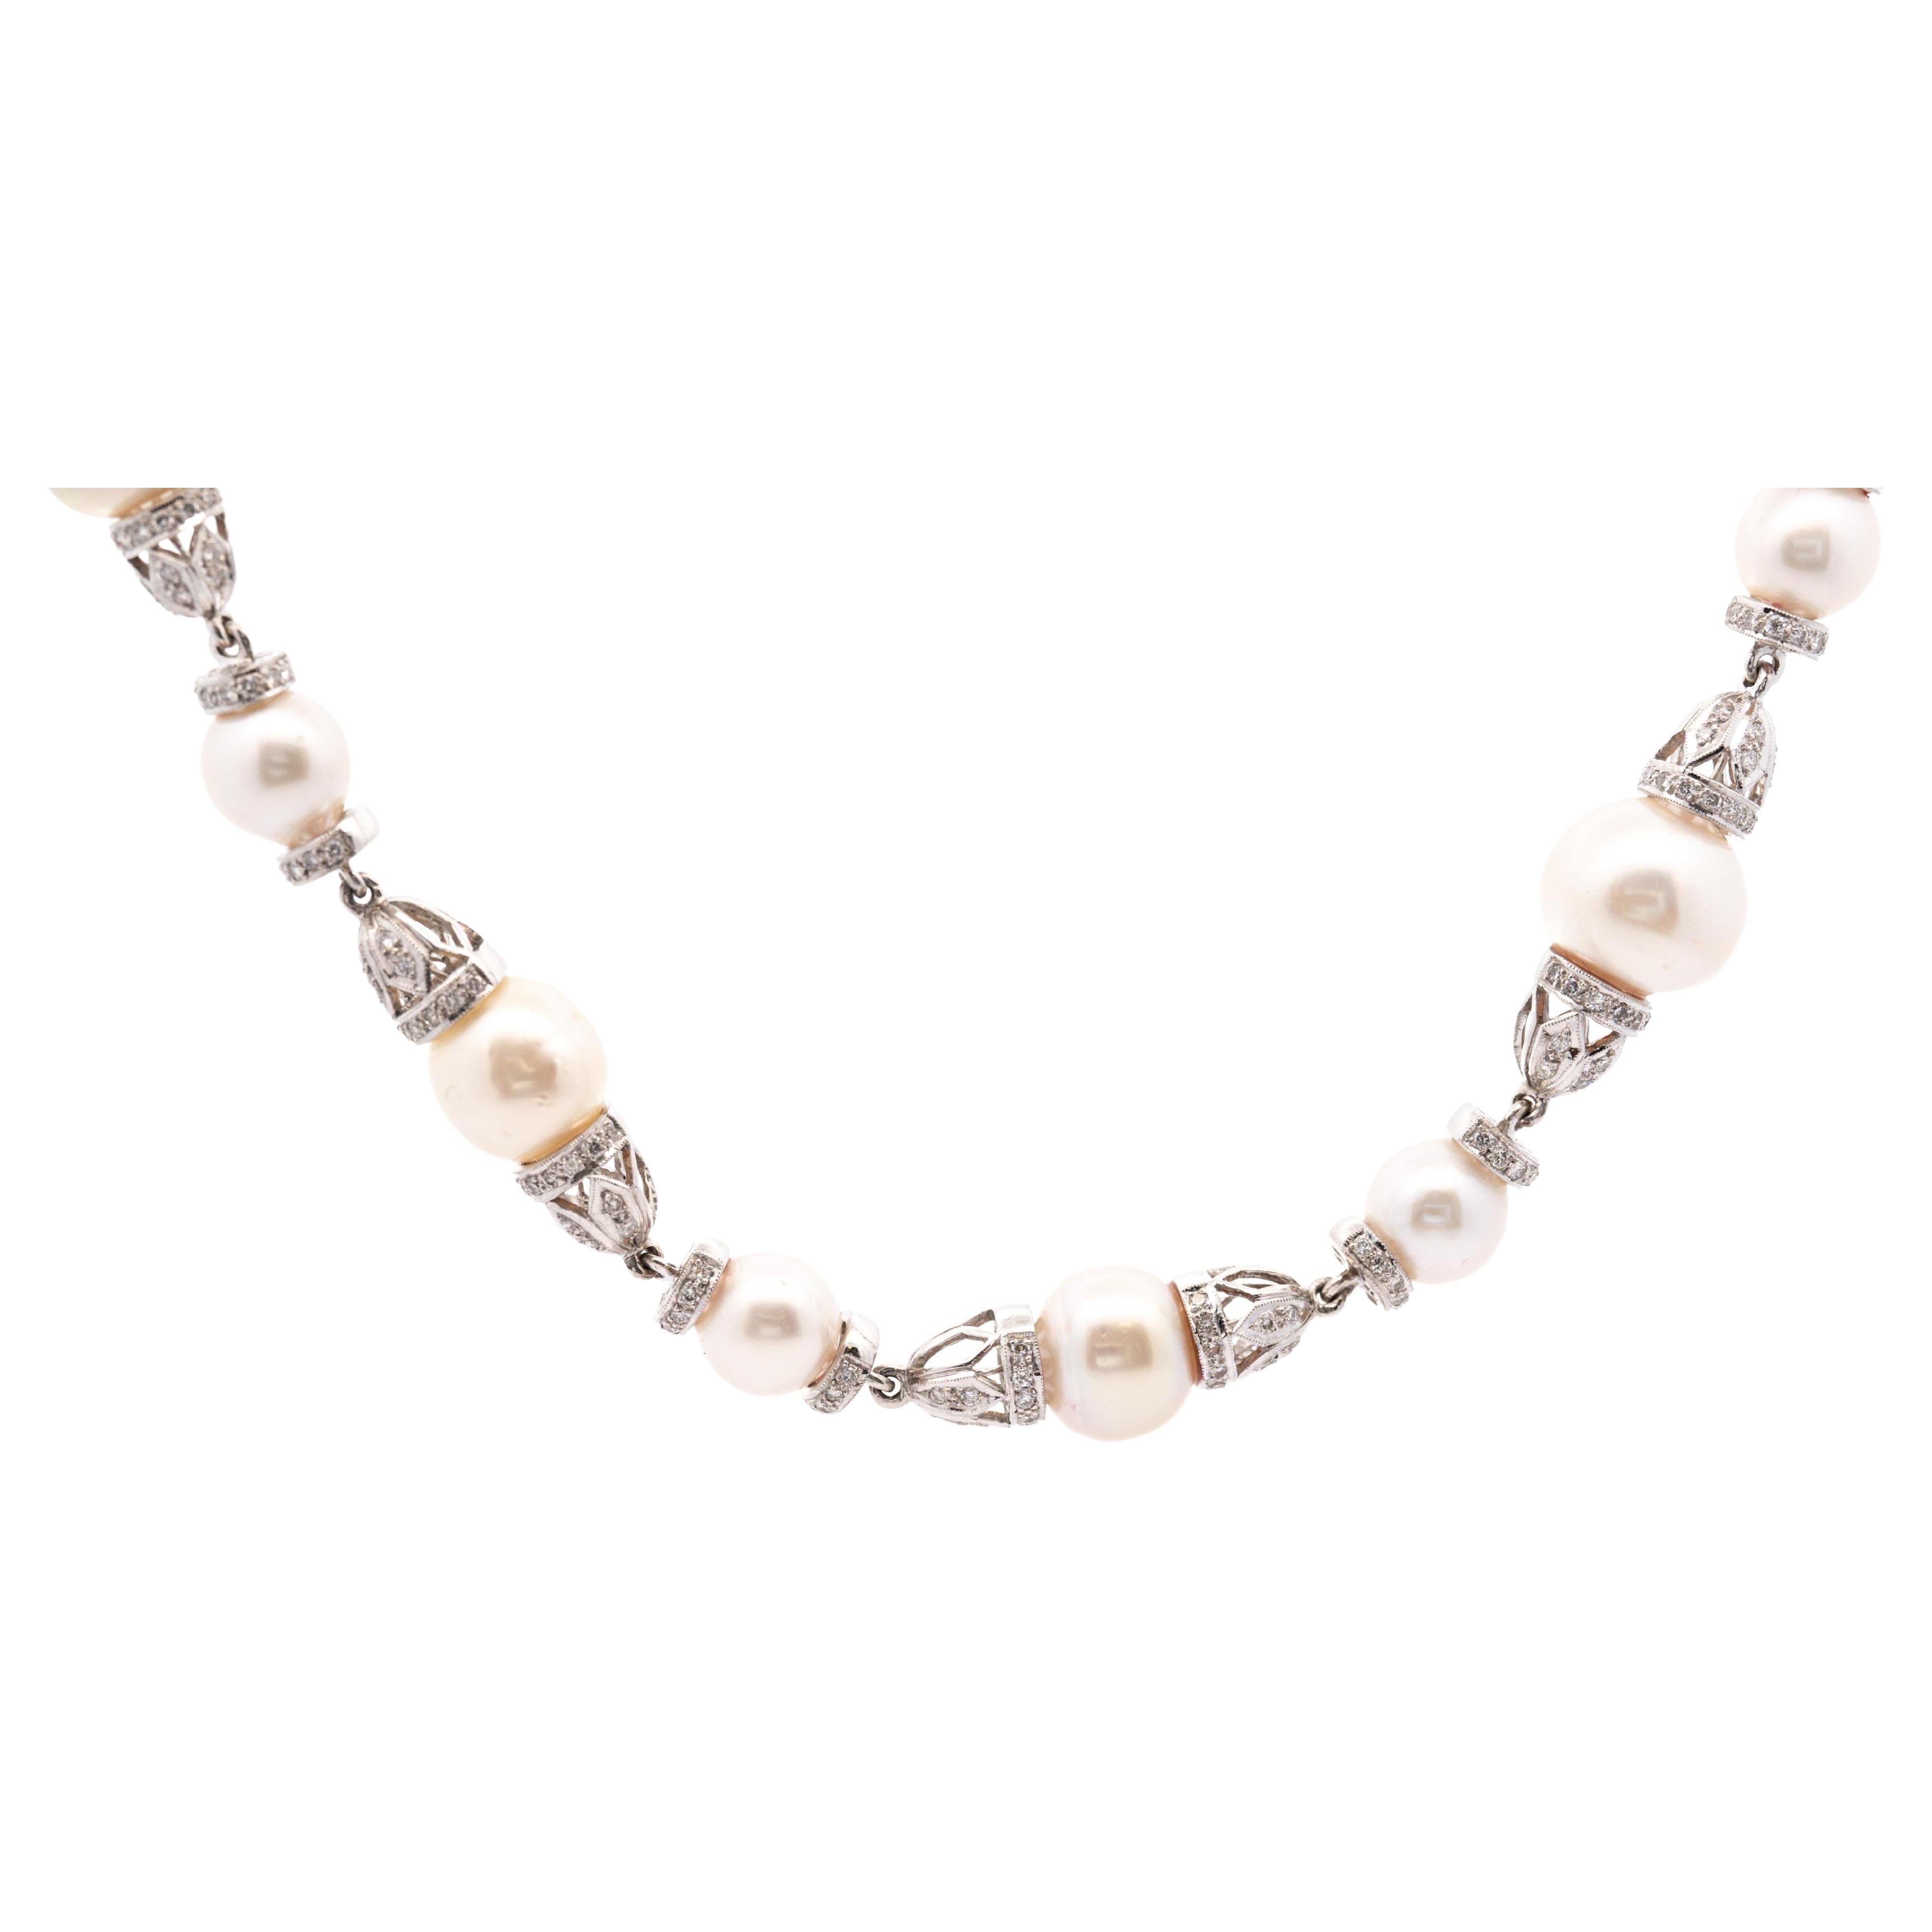 Vintage 18K White Gold 13mm South Sea Pearl & Diamond Choker Necklace